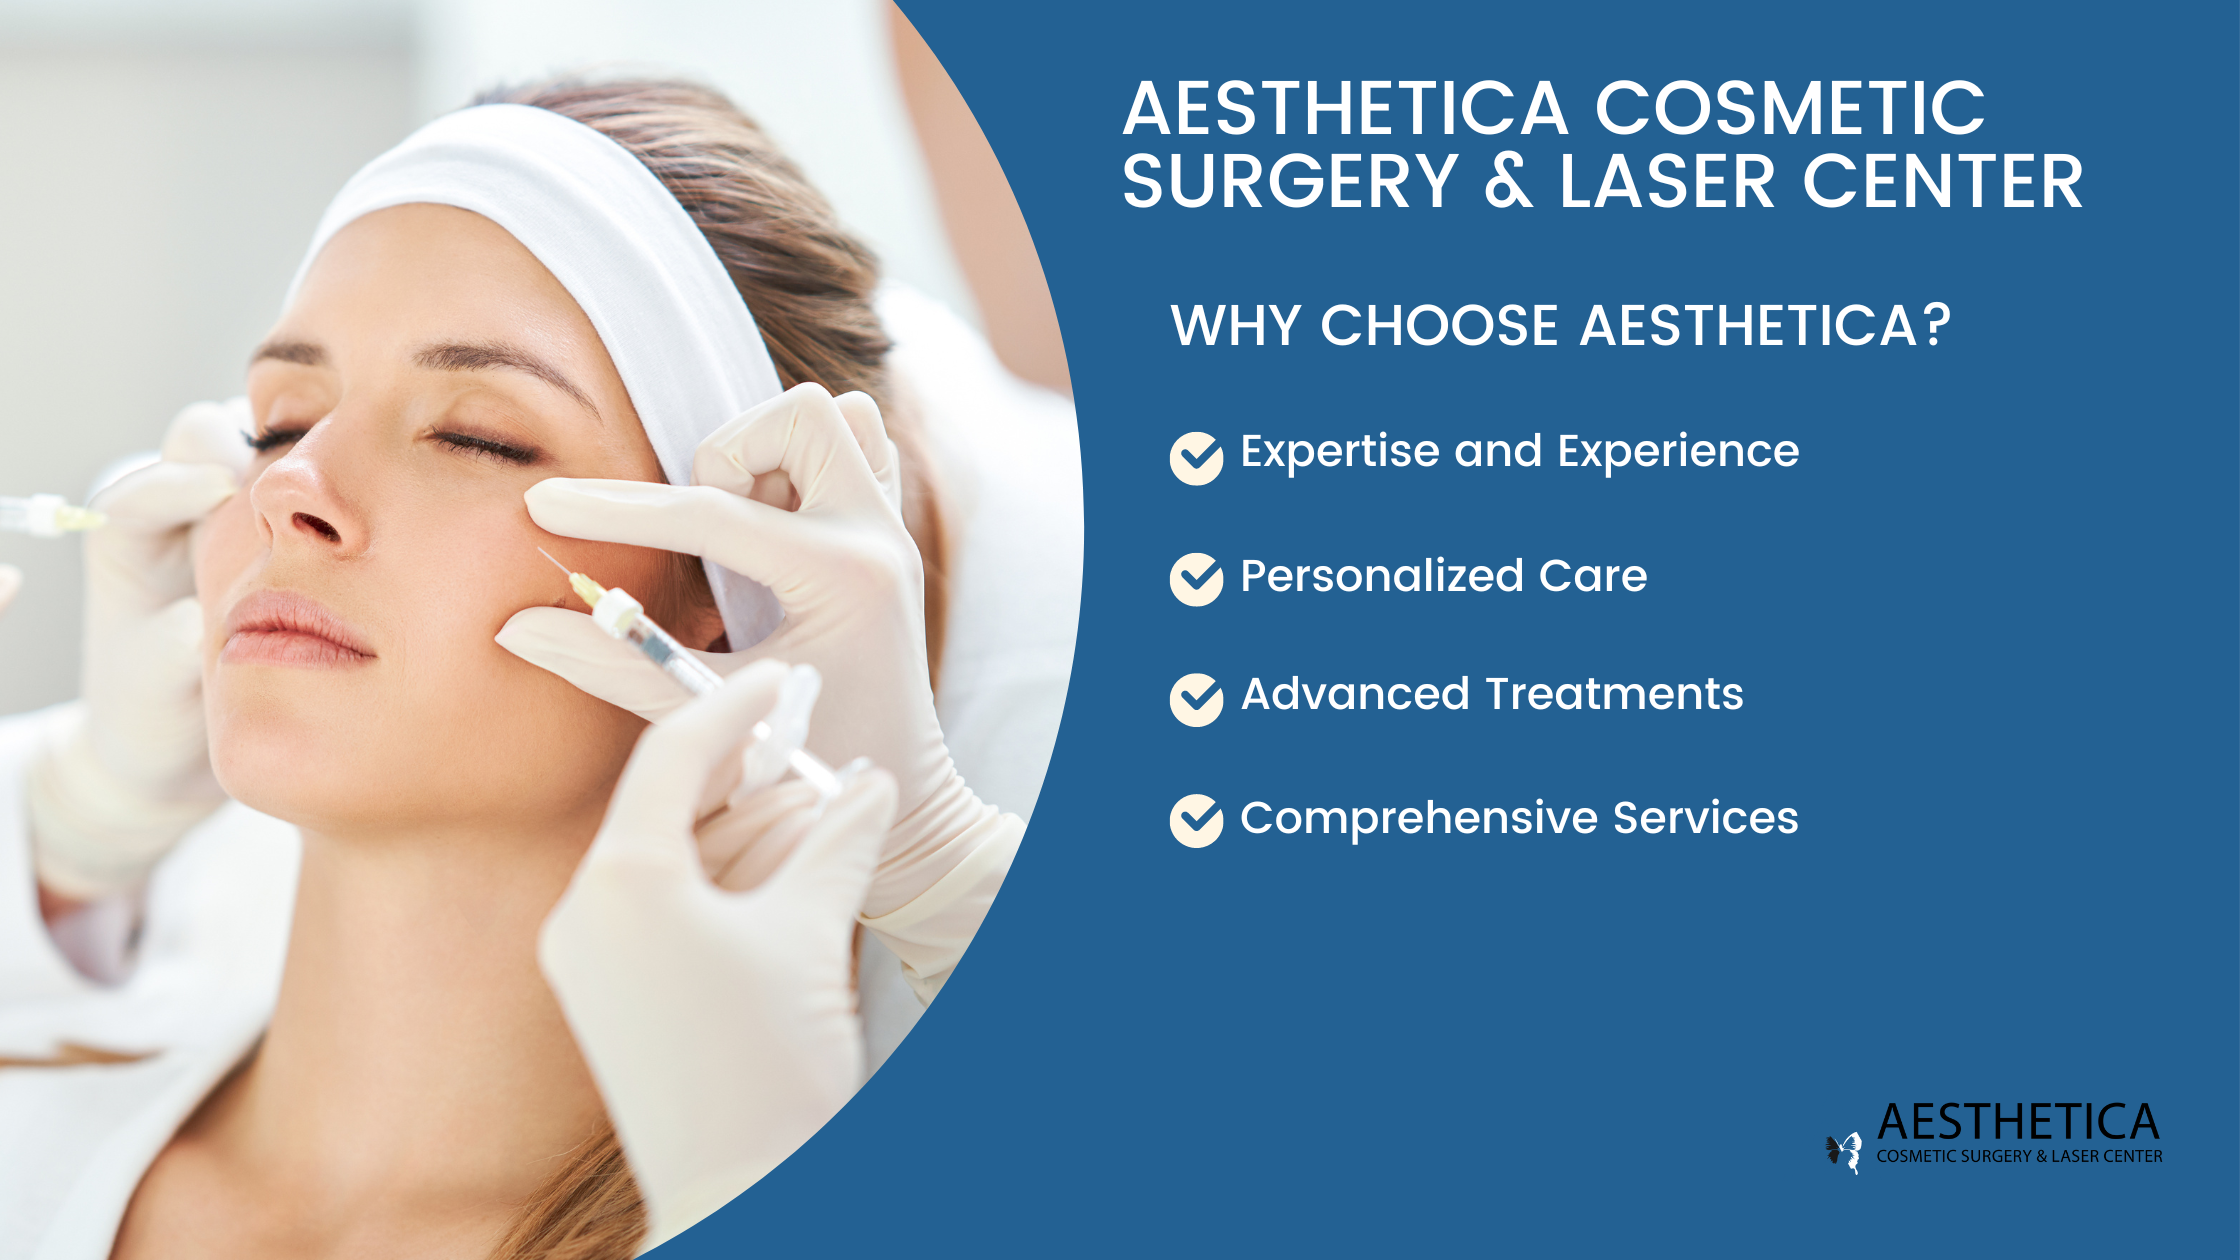 Aesthetica Cosmetic Surgery & Laser Center